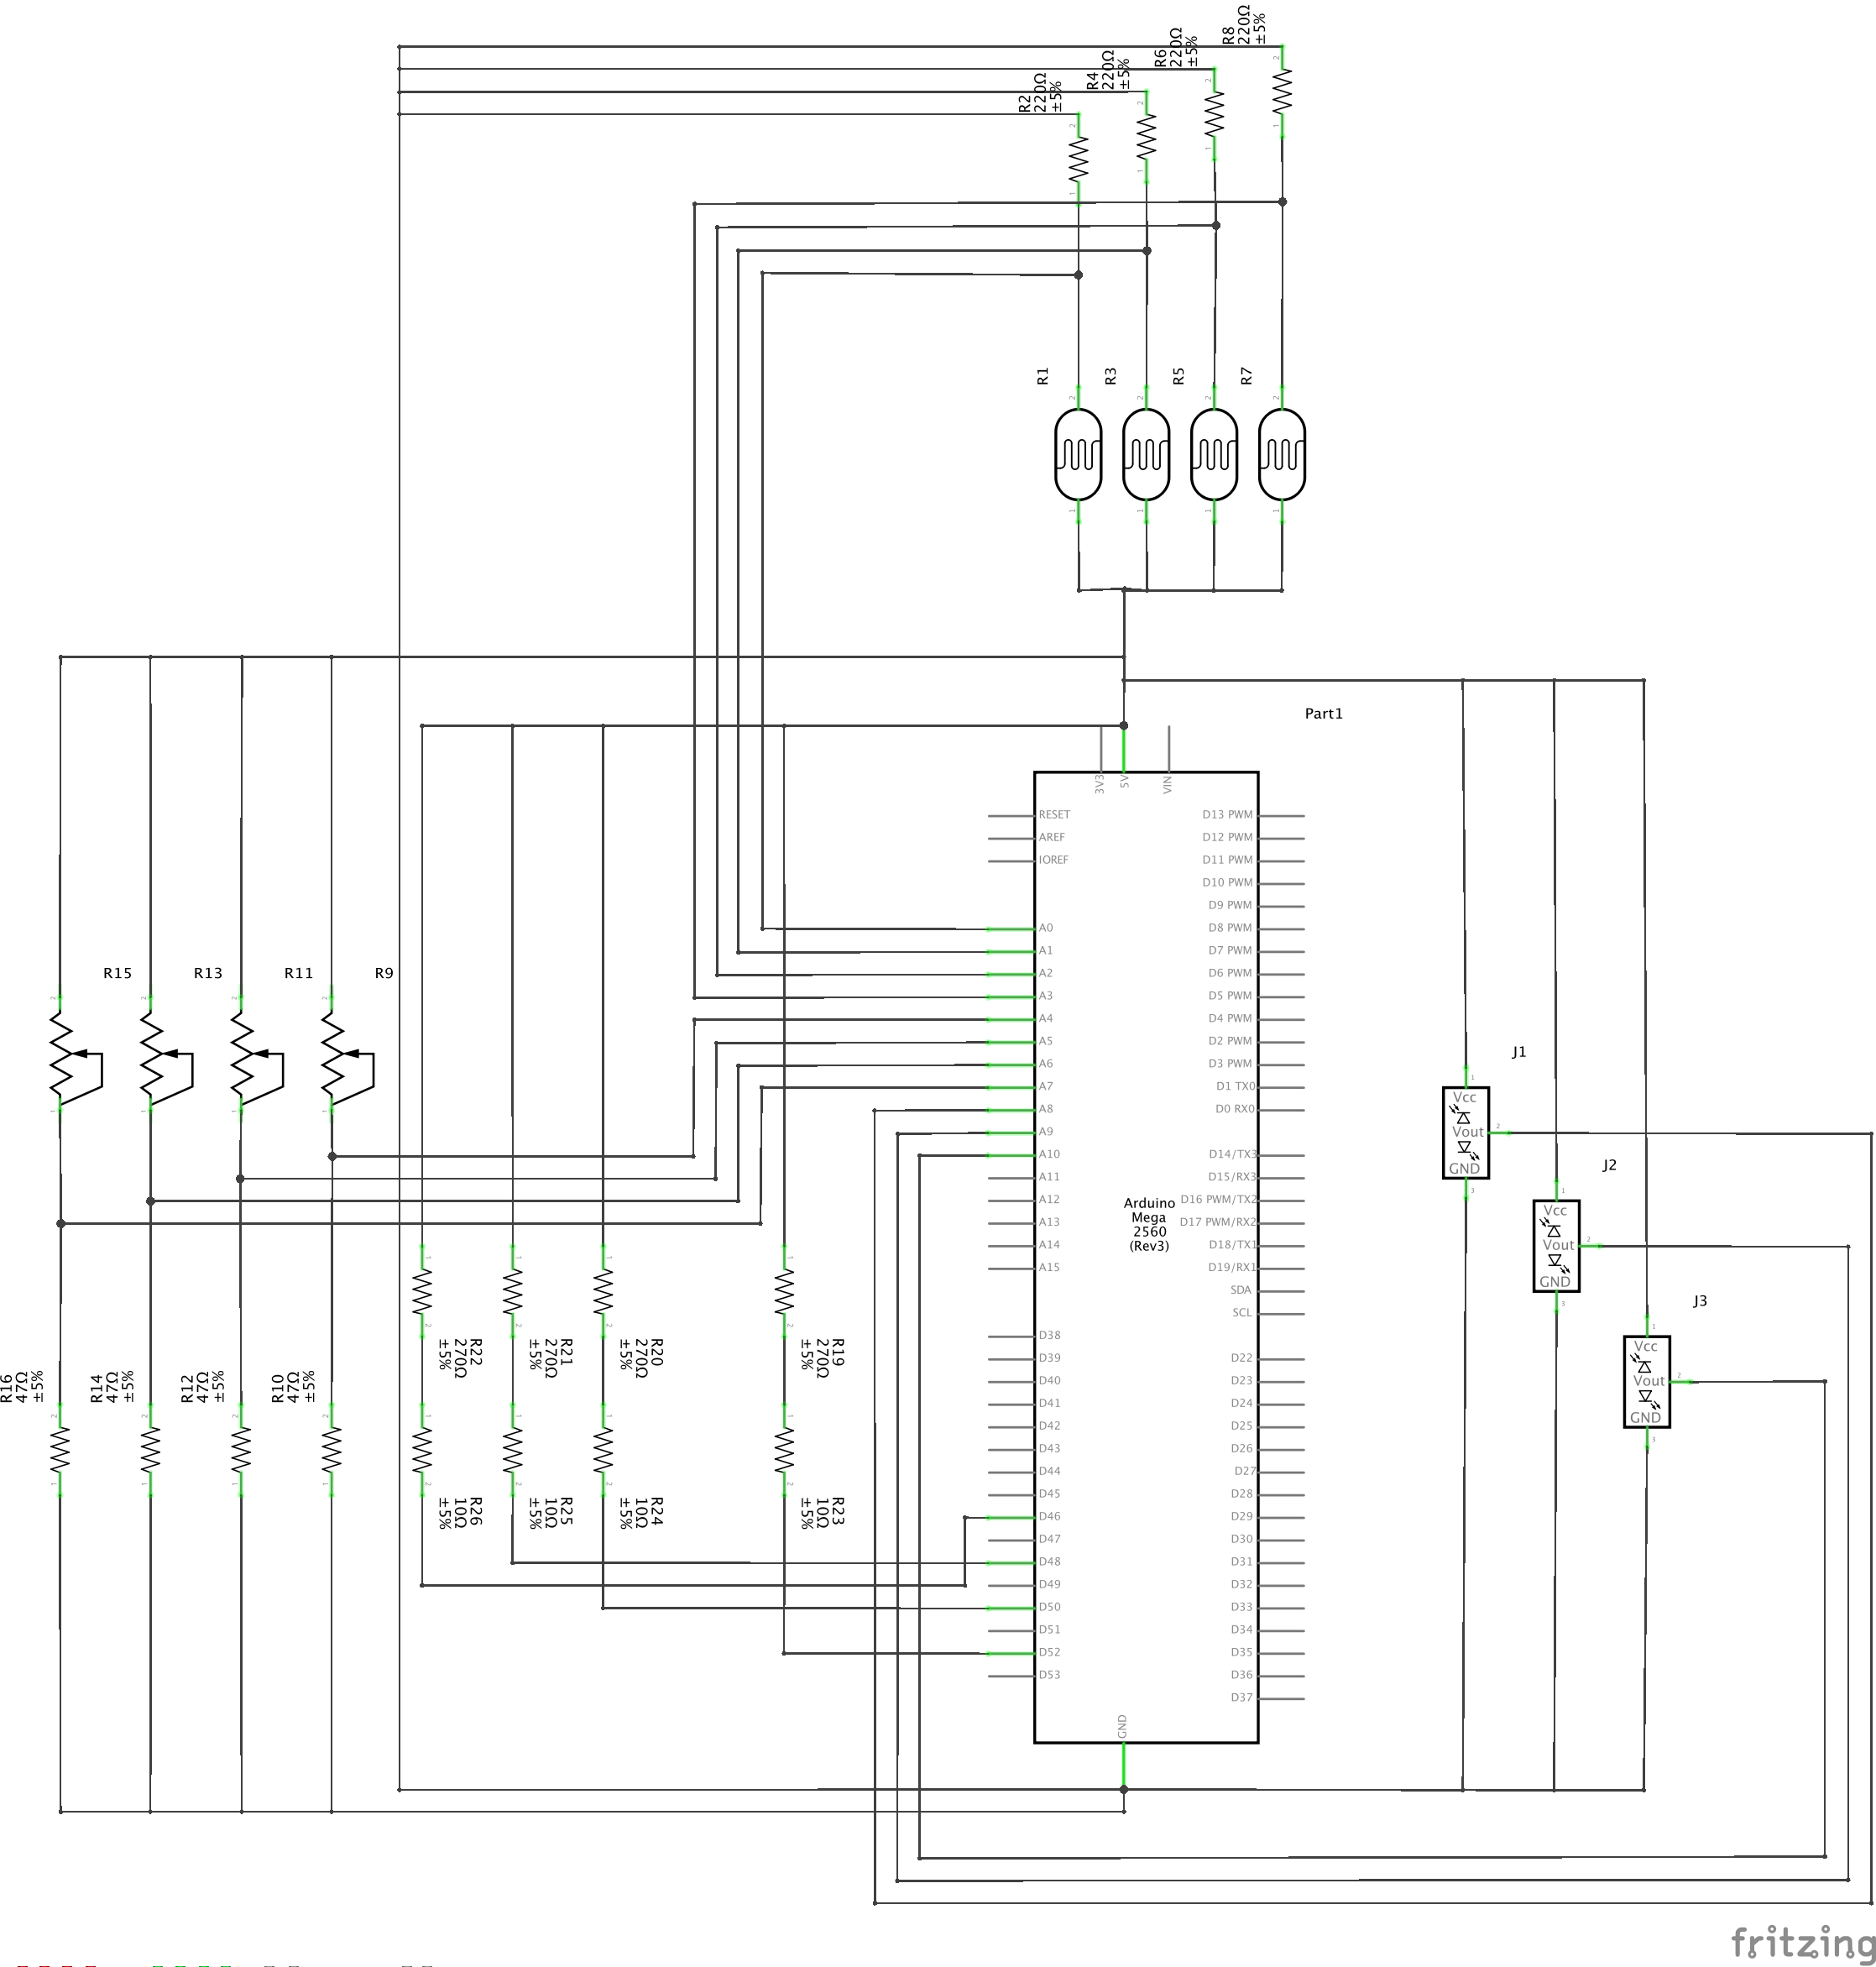 Arduino_sensors_connections_scheme.png